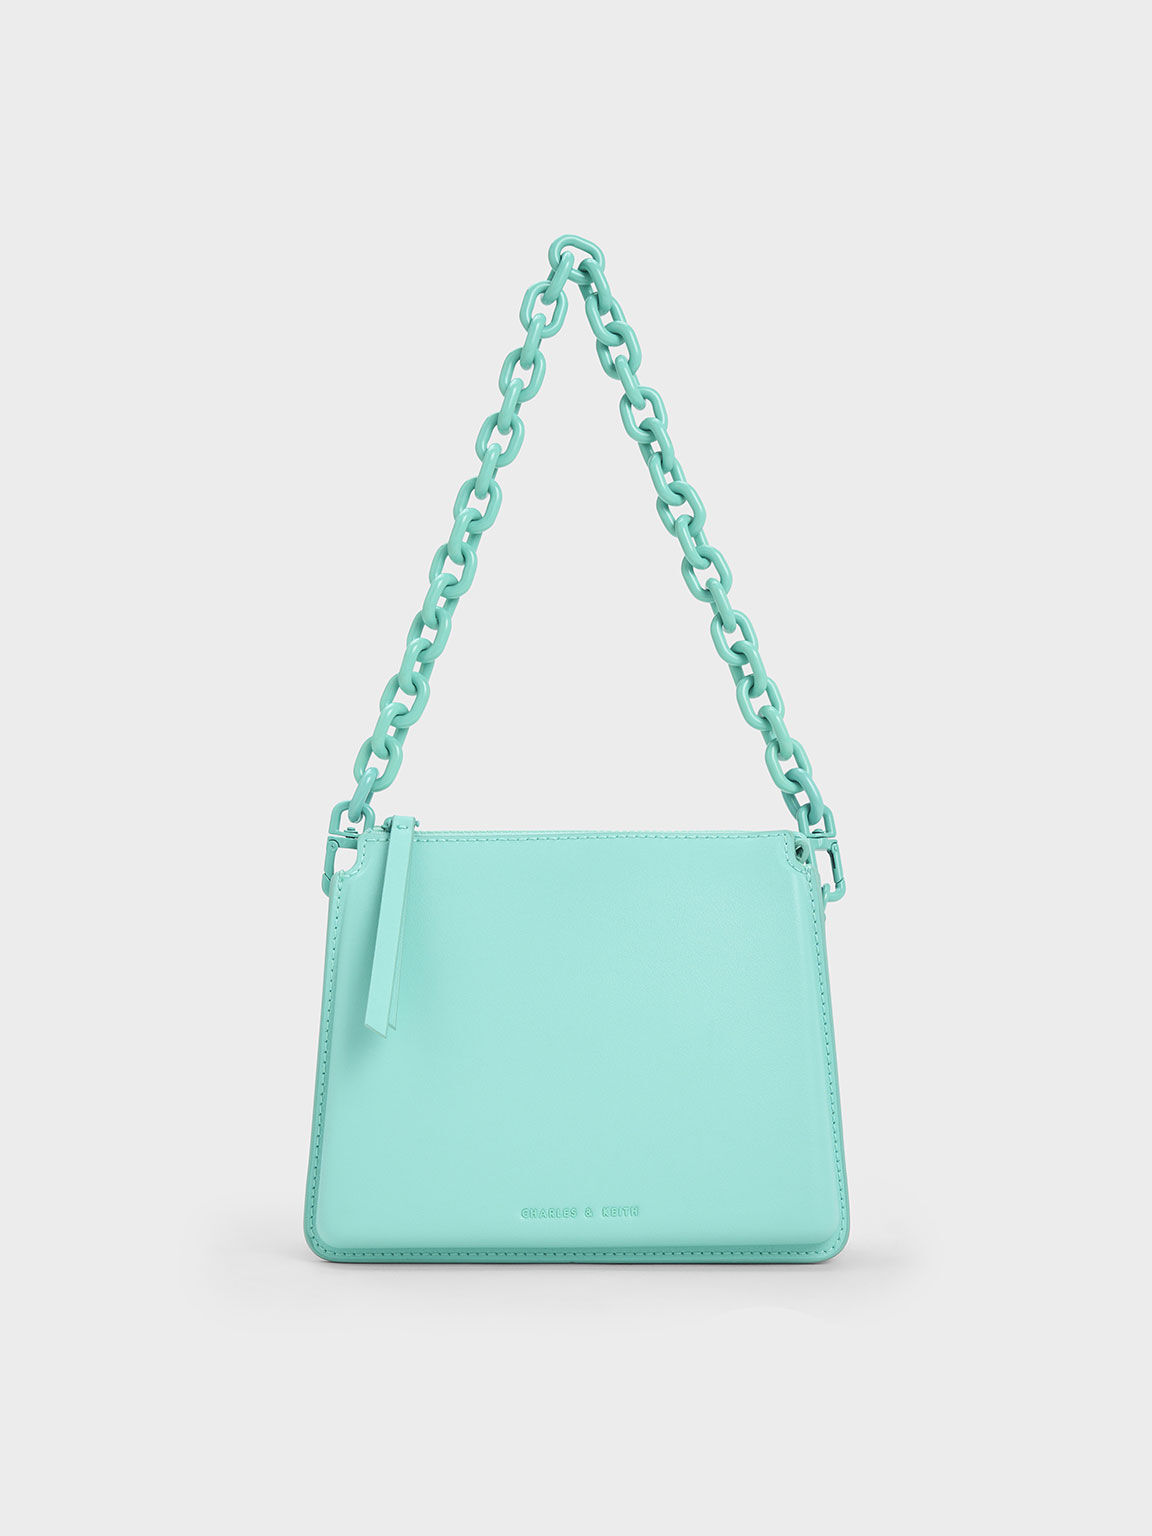 Handbag Shoulder Strap Adjustable - 25 mm x 130 cm, Accessories